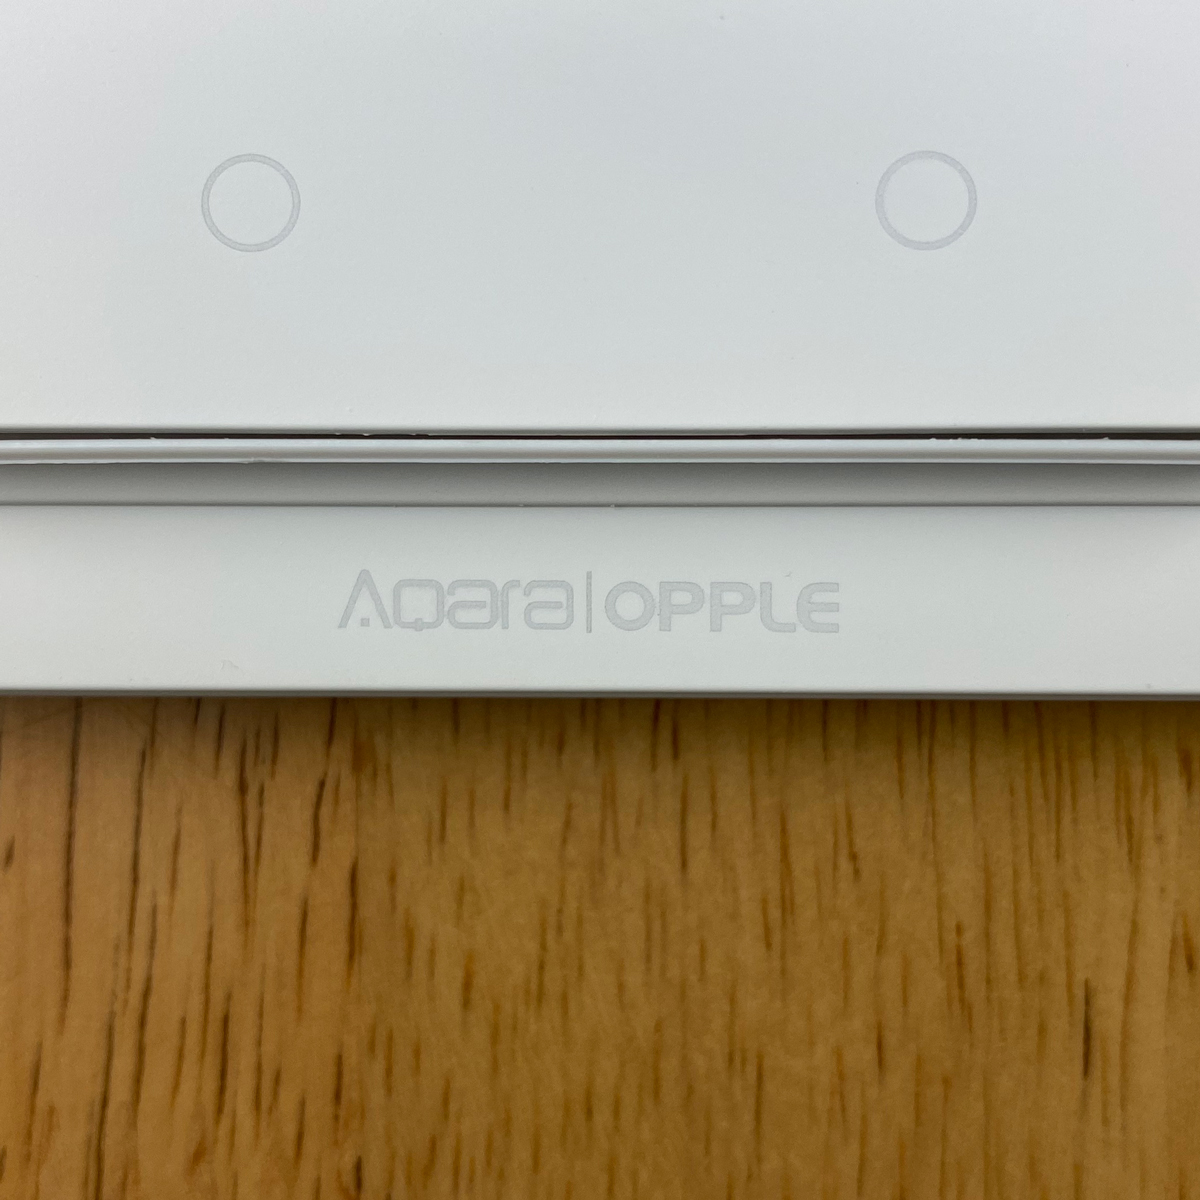 1575470304 382 AqaraOpple Smart Switch review – Homekit News and Reviews